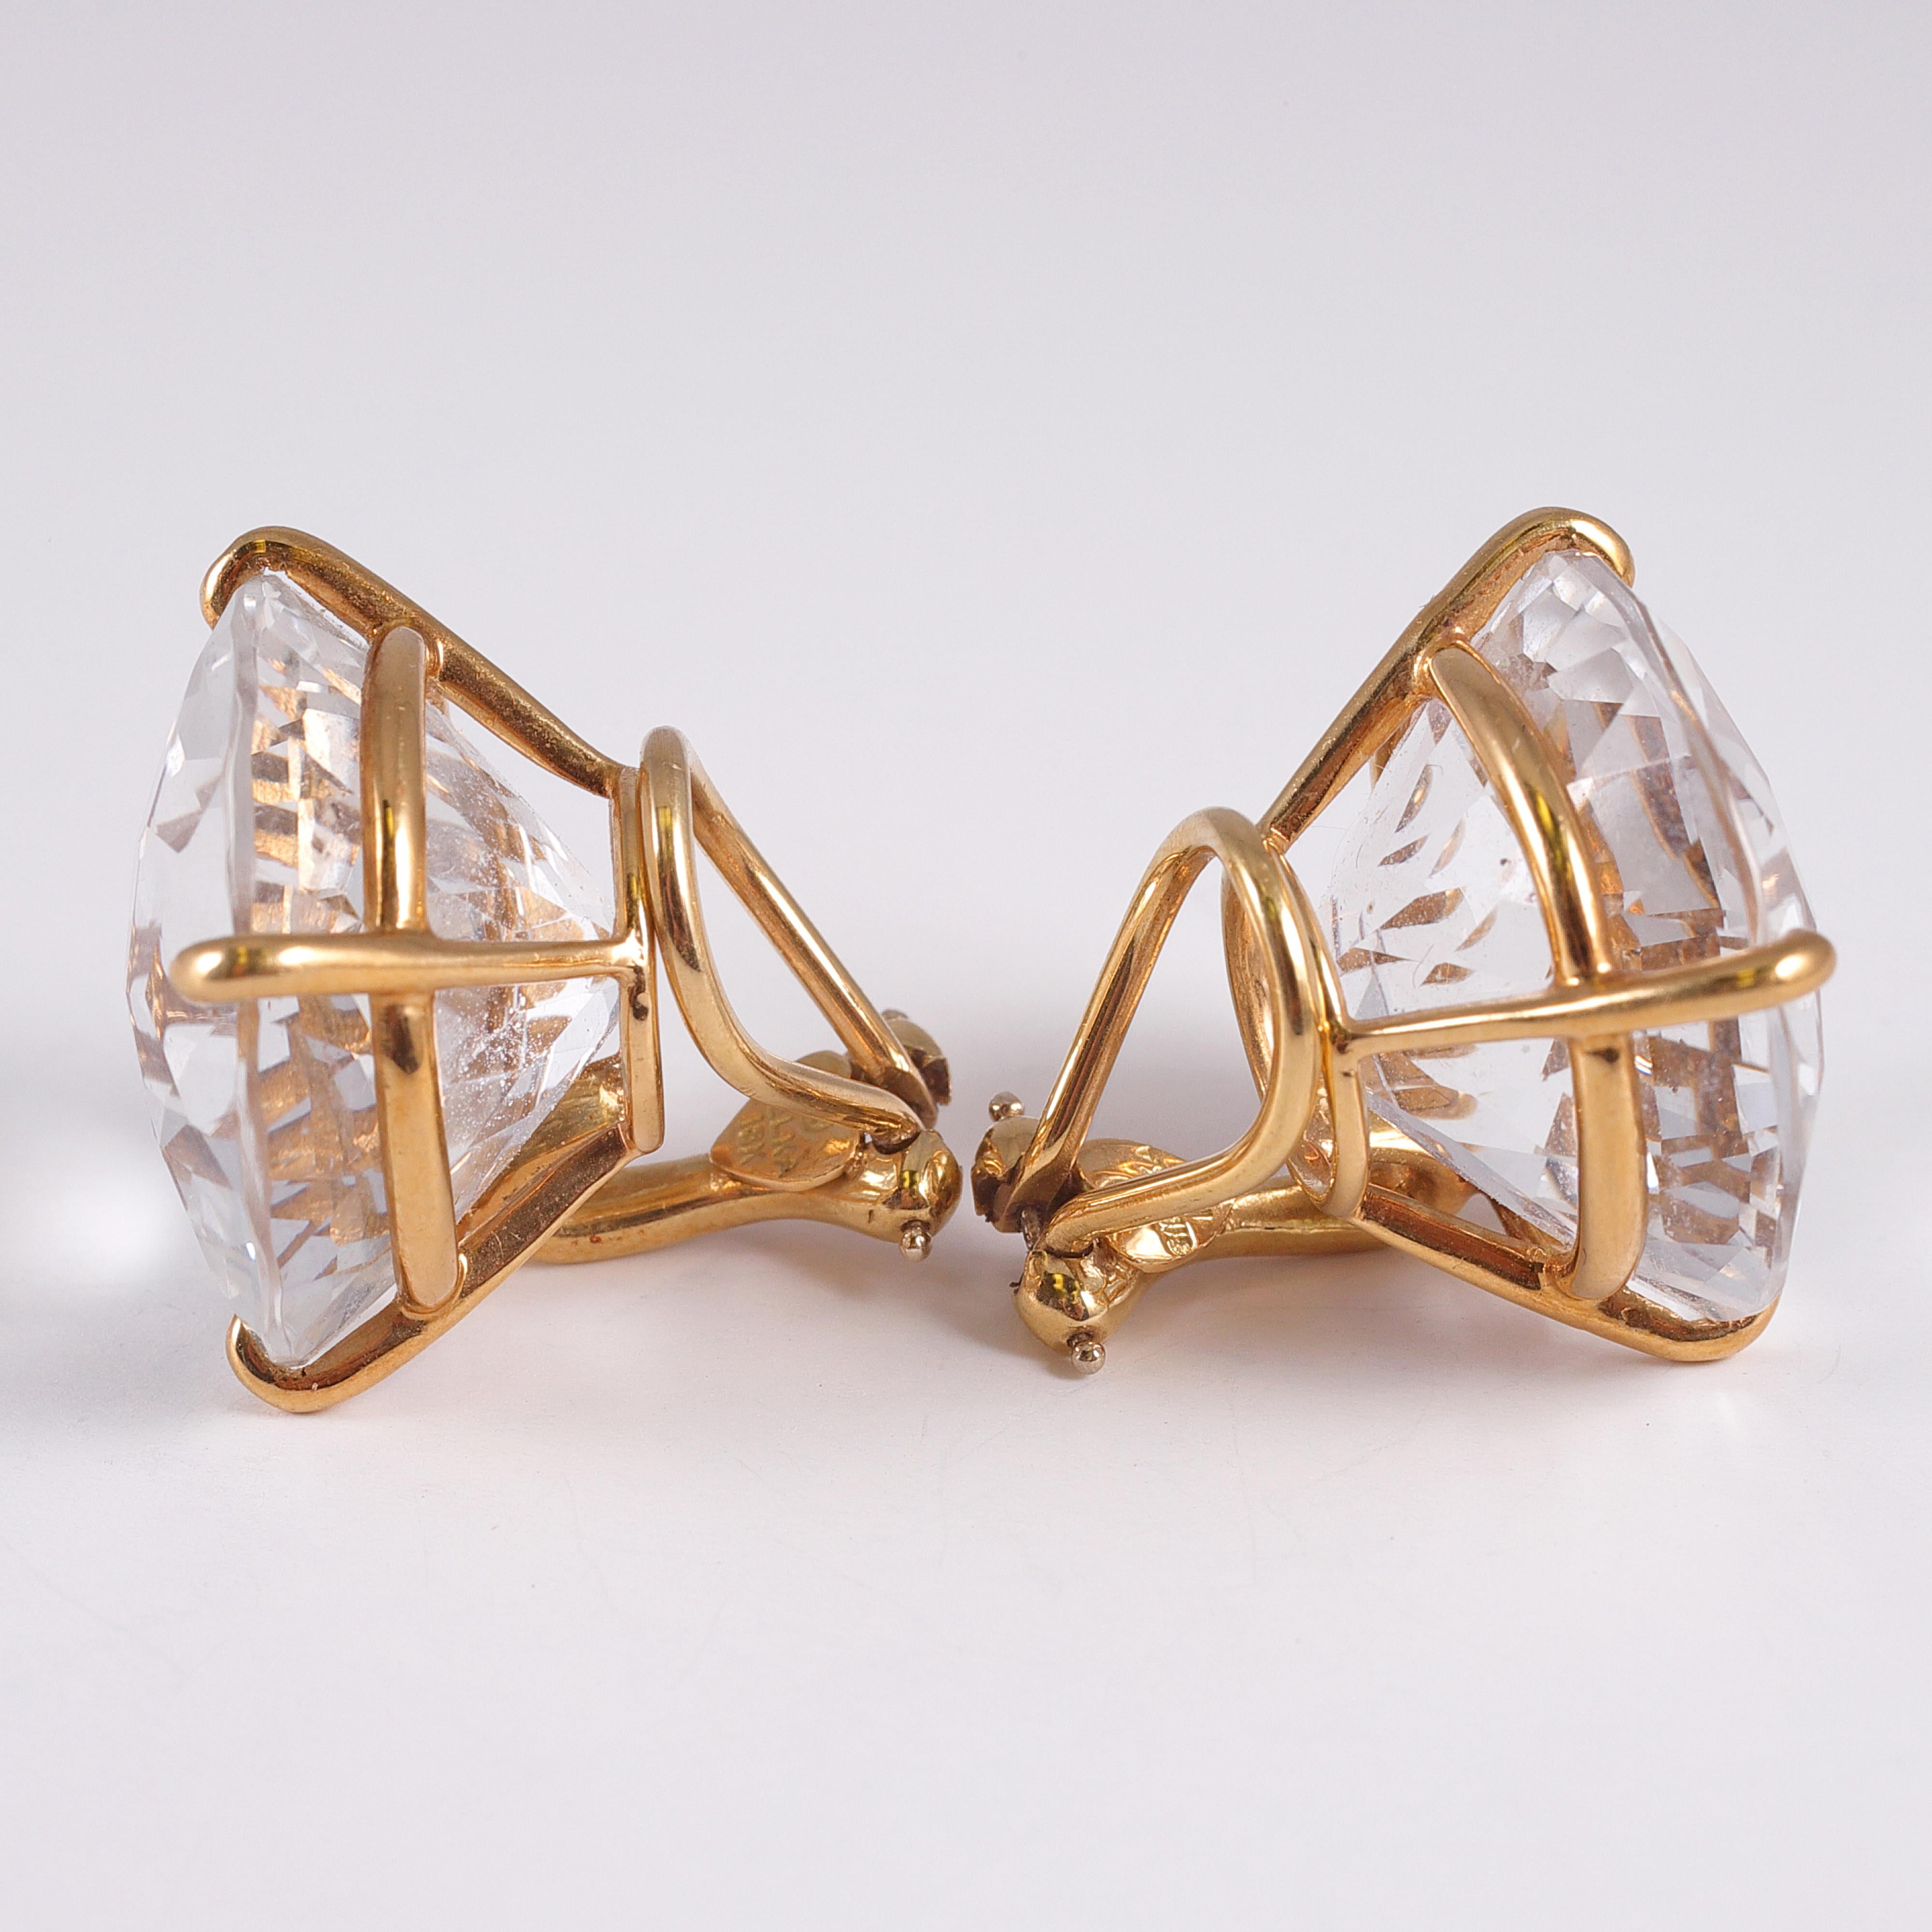 18 Karat Yellow Gold Colorless Quartz Earrings by Bielka 1